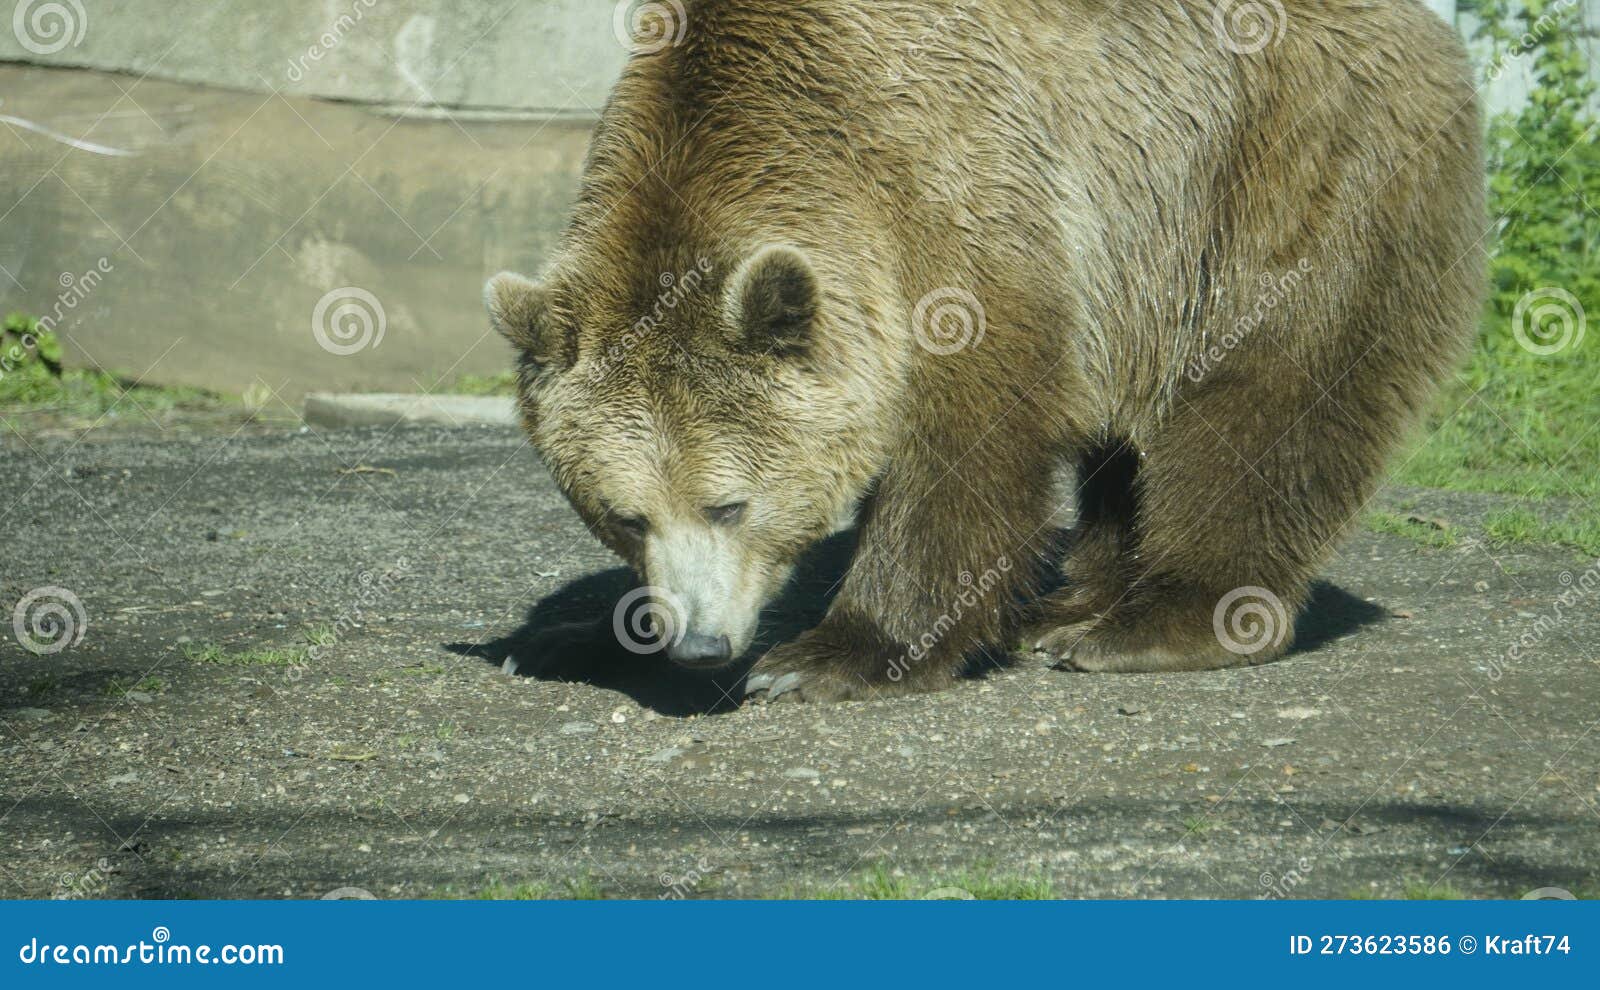 brown bear (ursus arctos) in the sun in a zoo enclosure. mammal belonging to the ursidae family